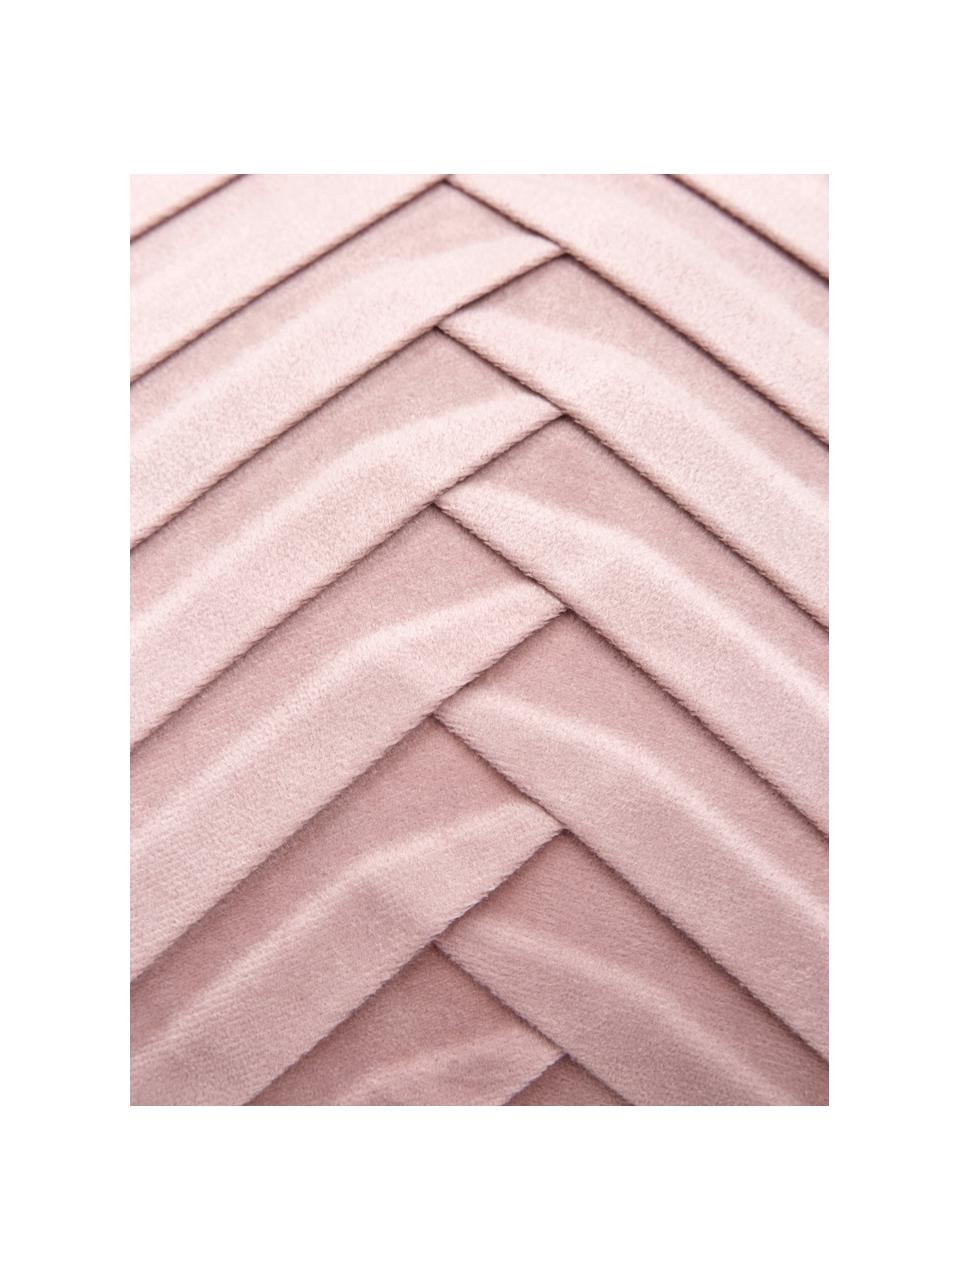 Samt-Kissenhülle Lucie in Rosa mit Struktur-Oberfläche, 100% Samt (Polyester), Rosa, B 30 x L 50 cm